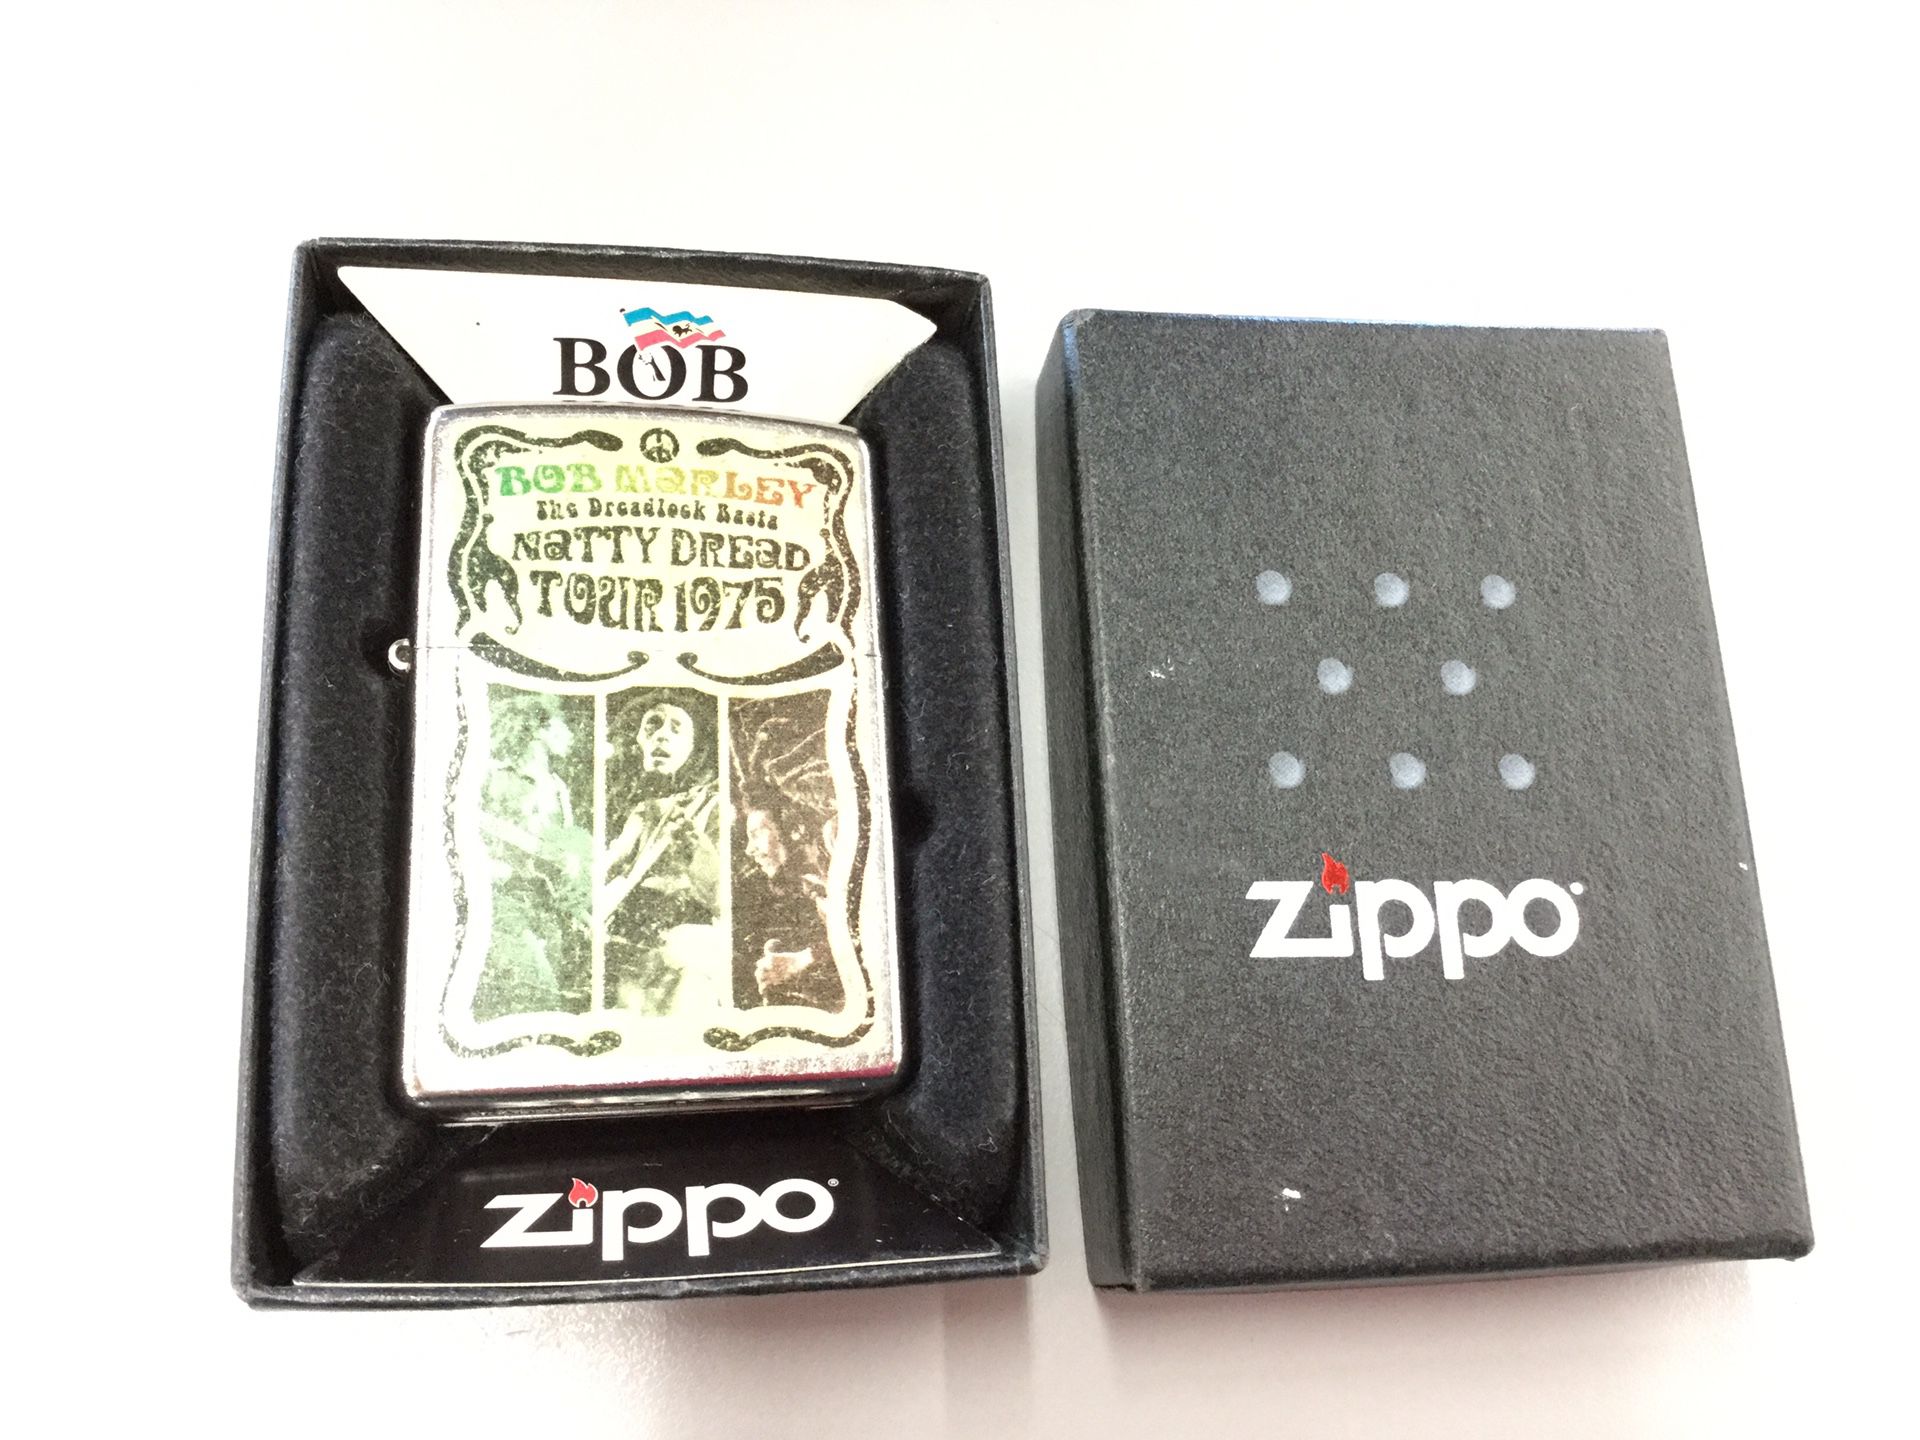 Bob Marley Zippo Lighter with Box